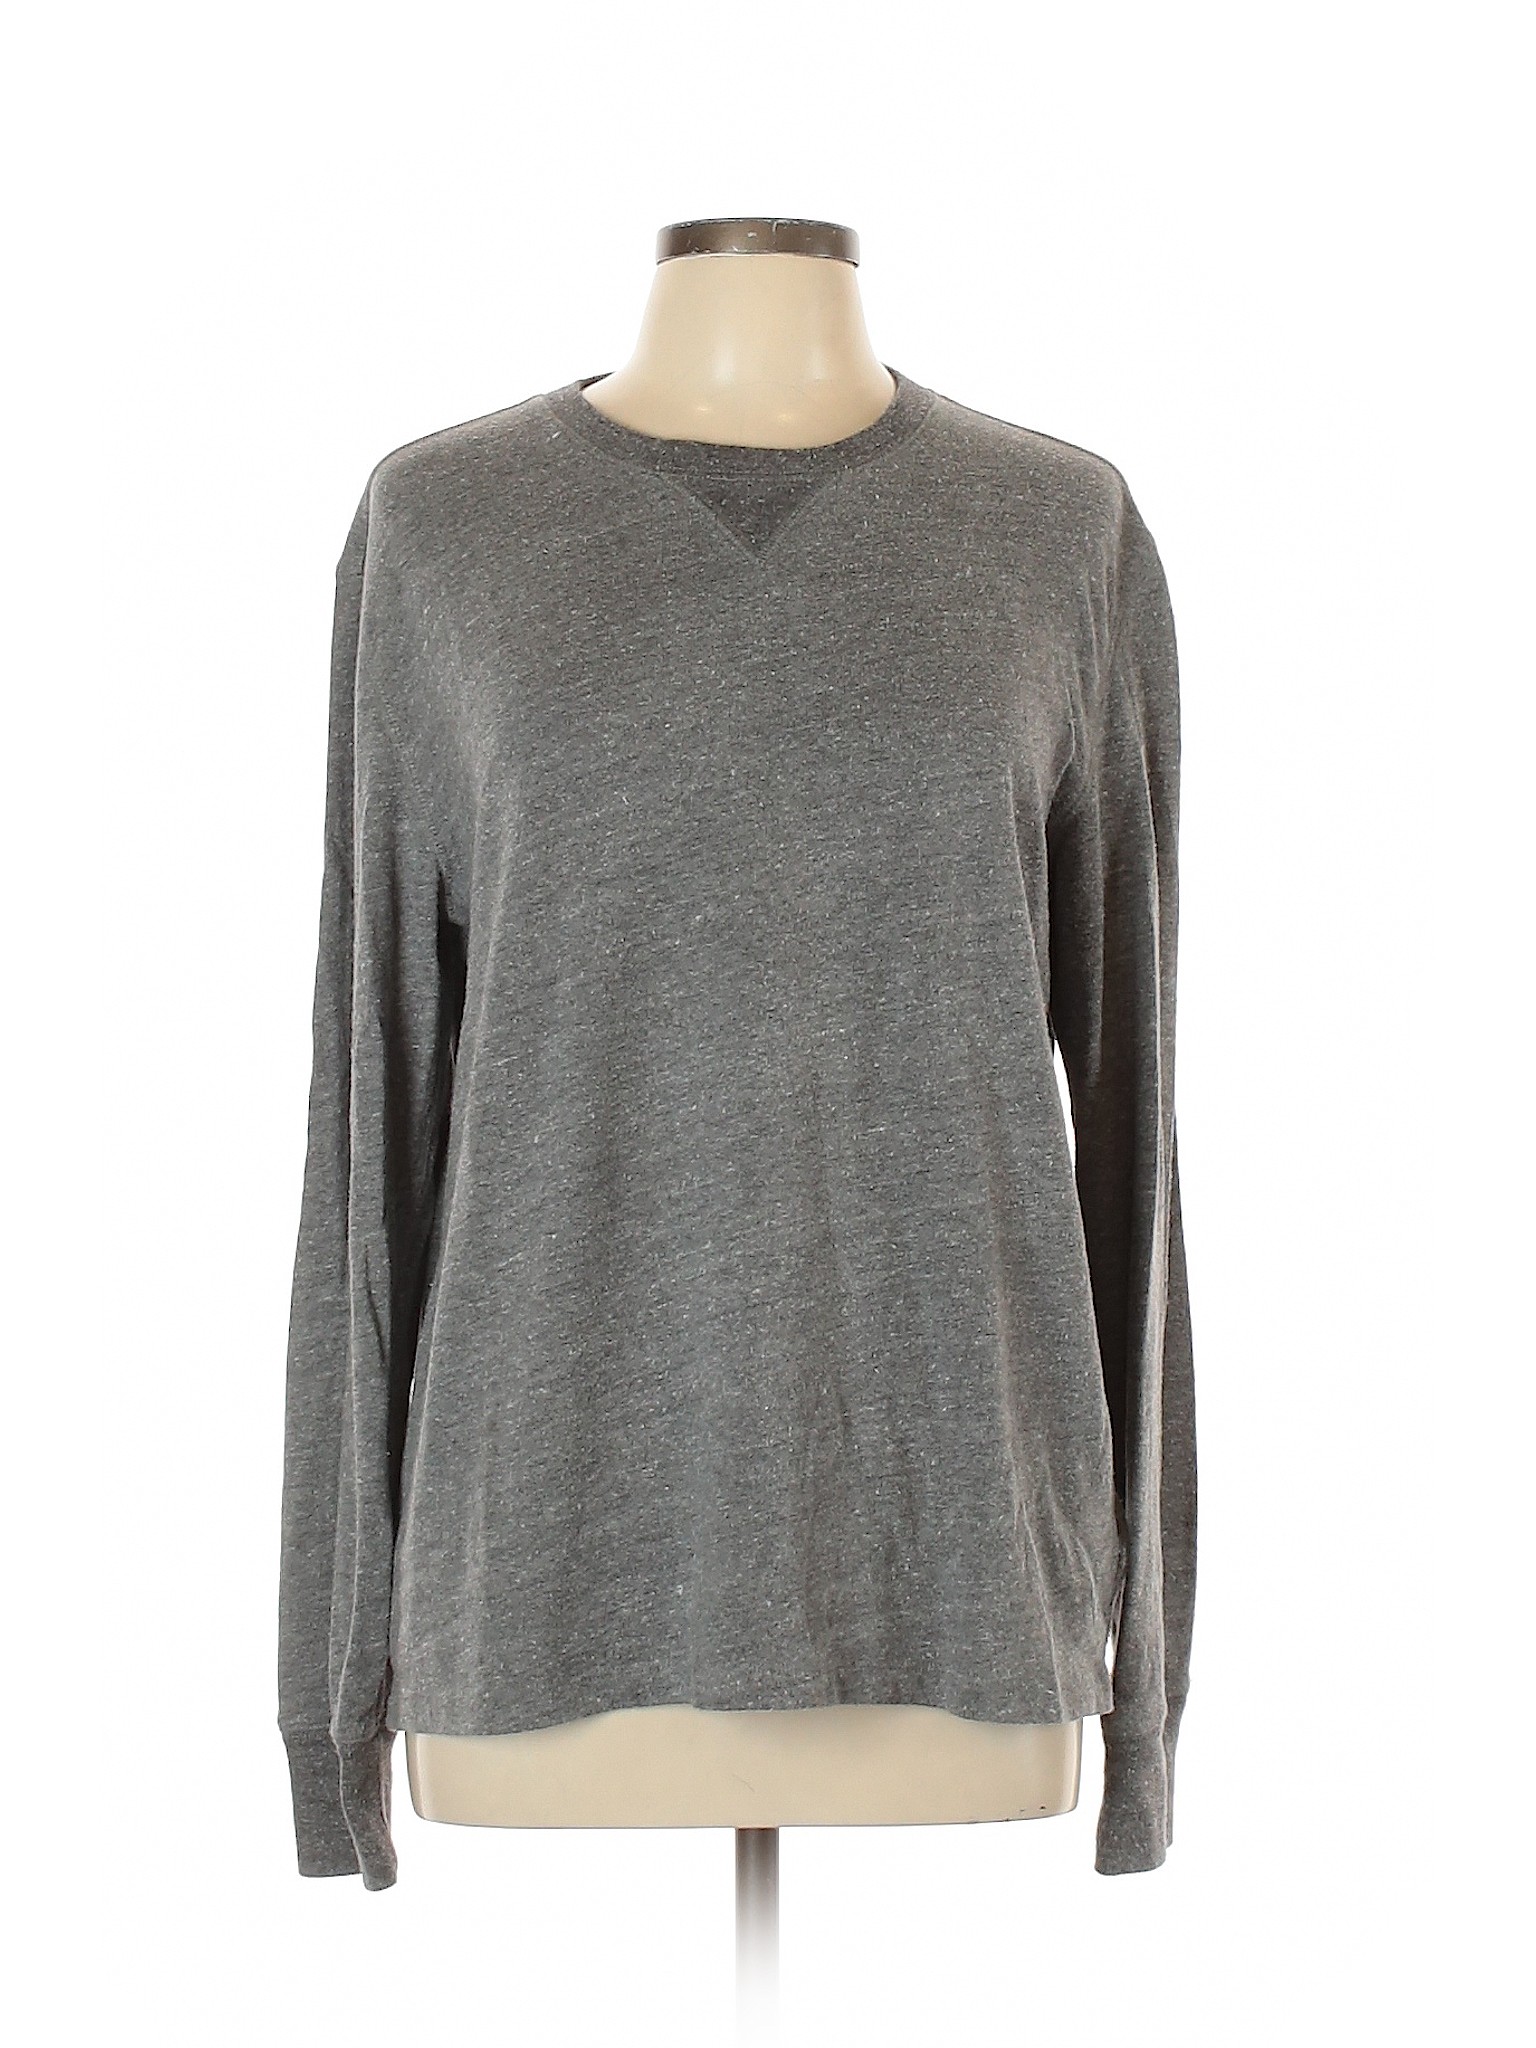 Gap Women Gray Pullover Sweater L | eBay